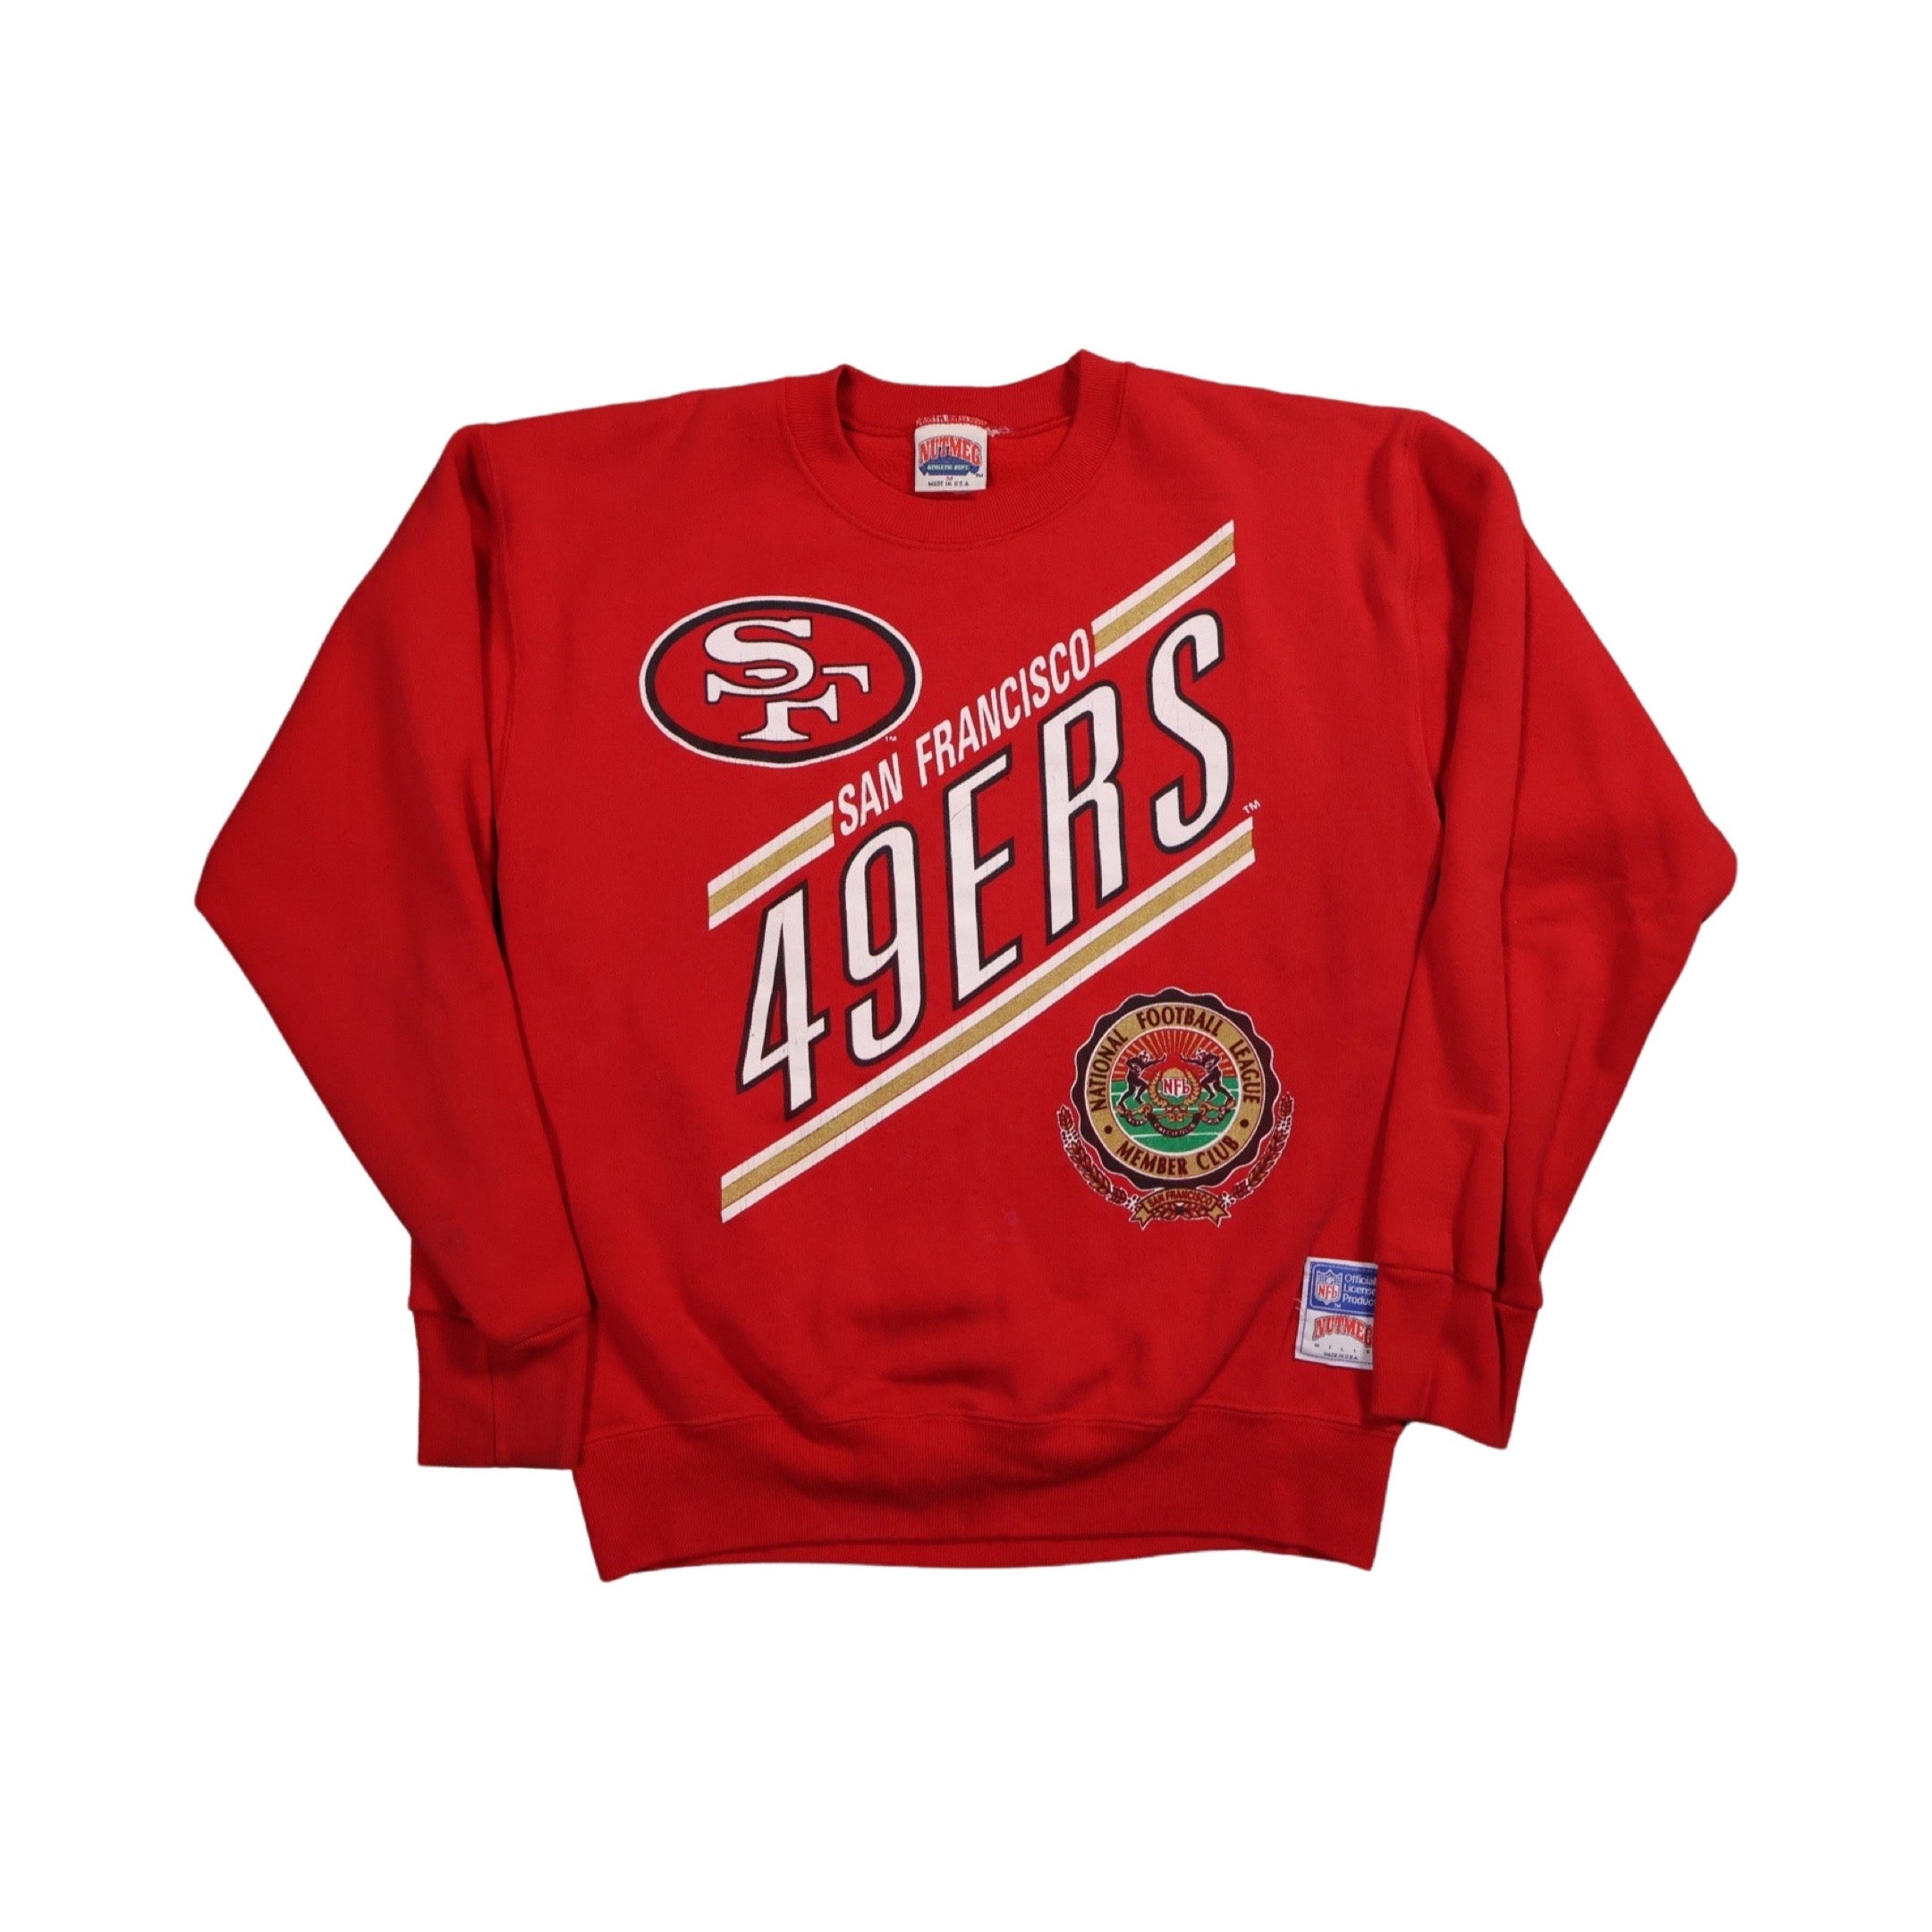 San Francisco 49ers 90s Sweater (Medium)